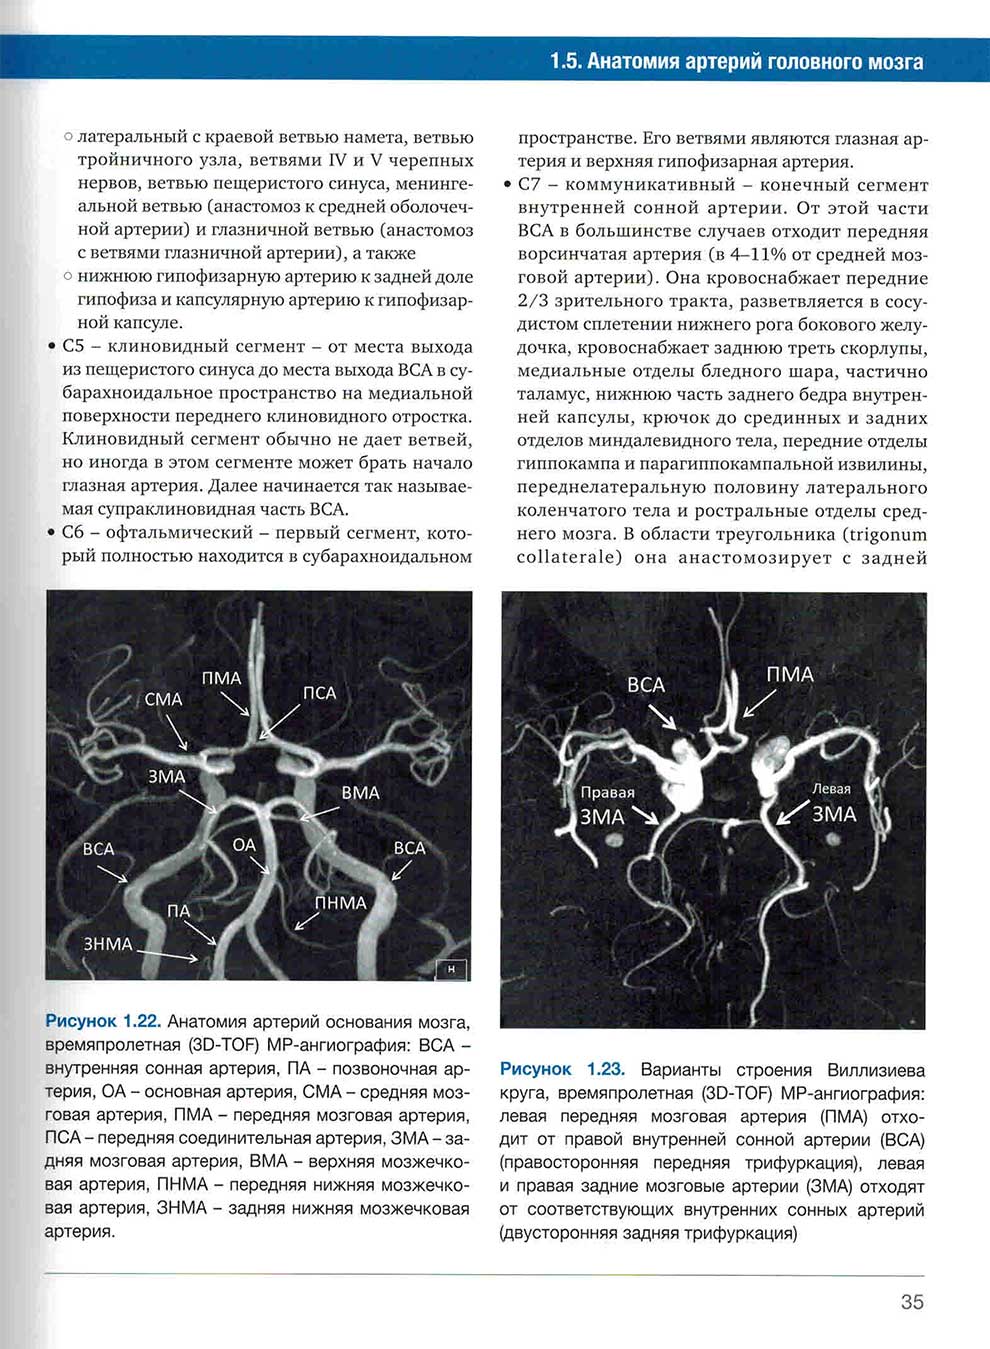 Рисунок 1.22. Анатомия артерий основания мозга